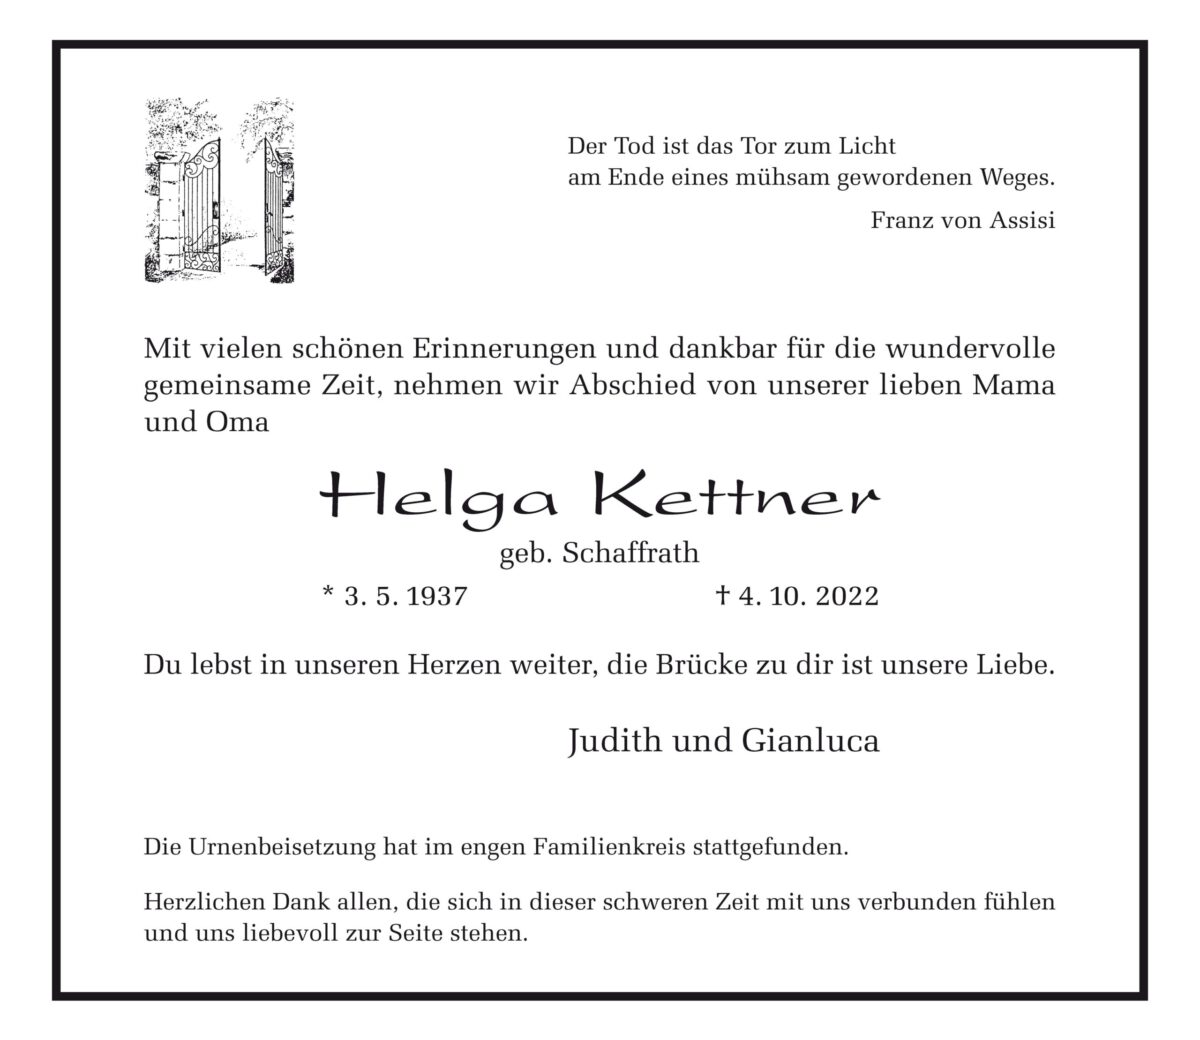 Helga Kettner